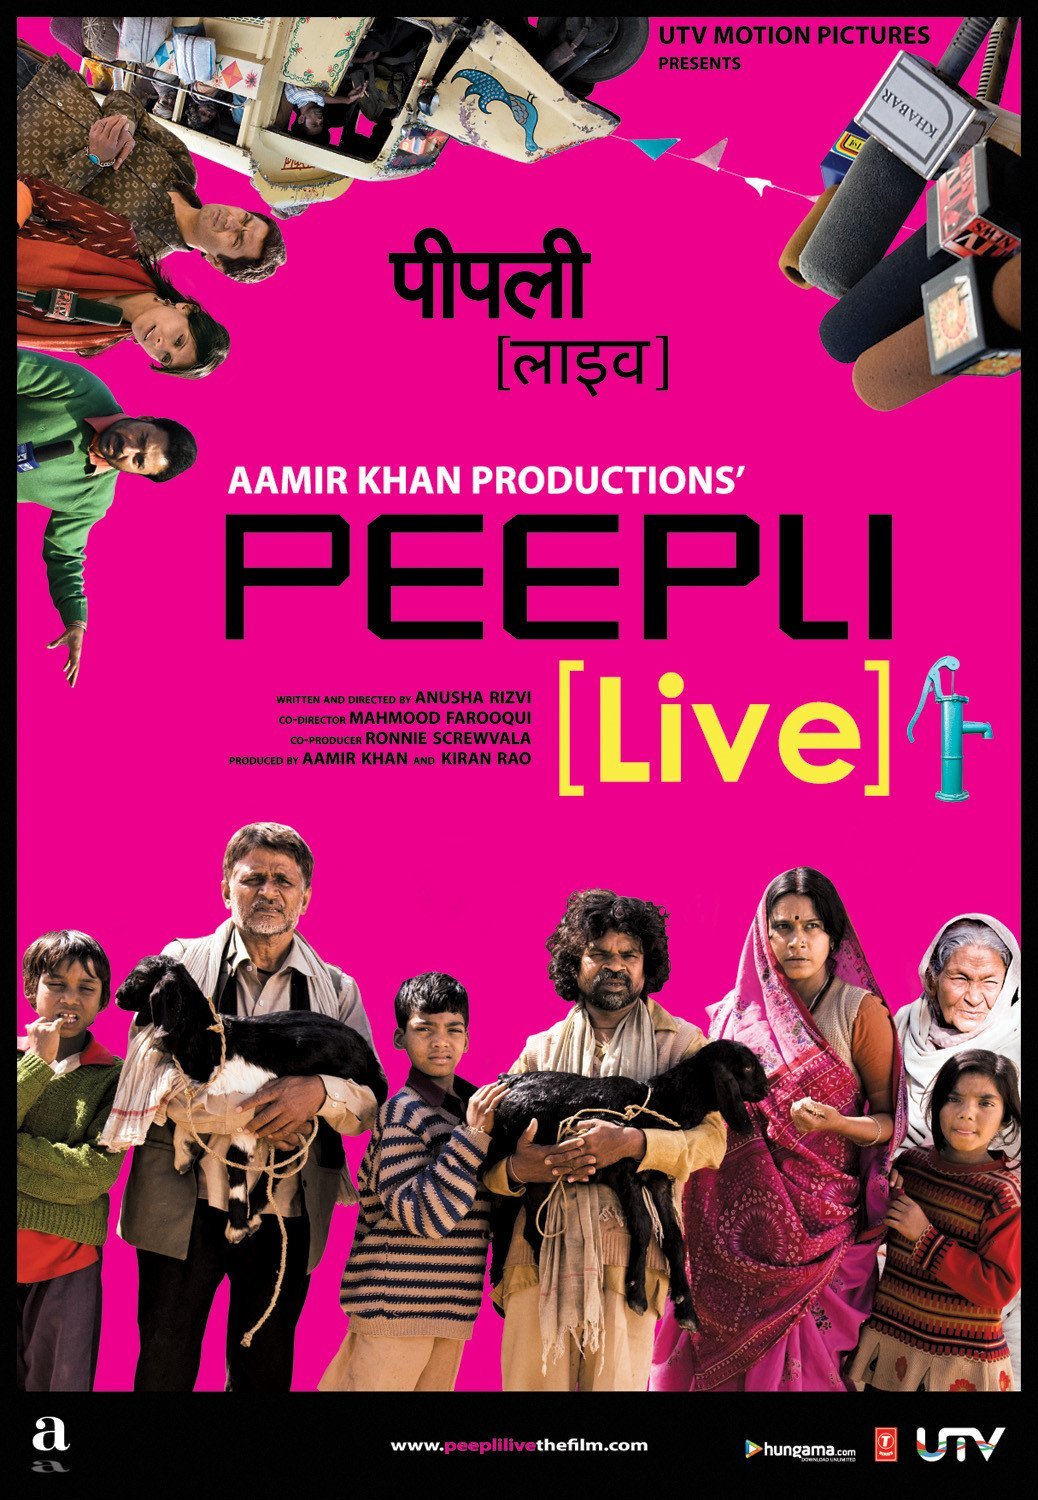 PEEPLI LIVE (Peepli [Live])